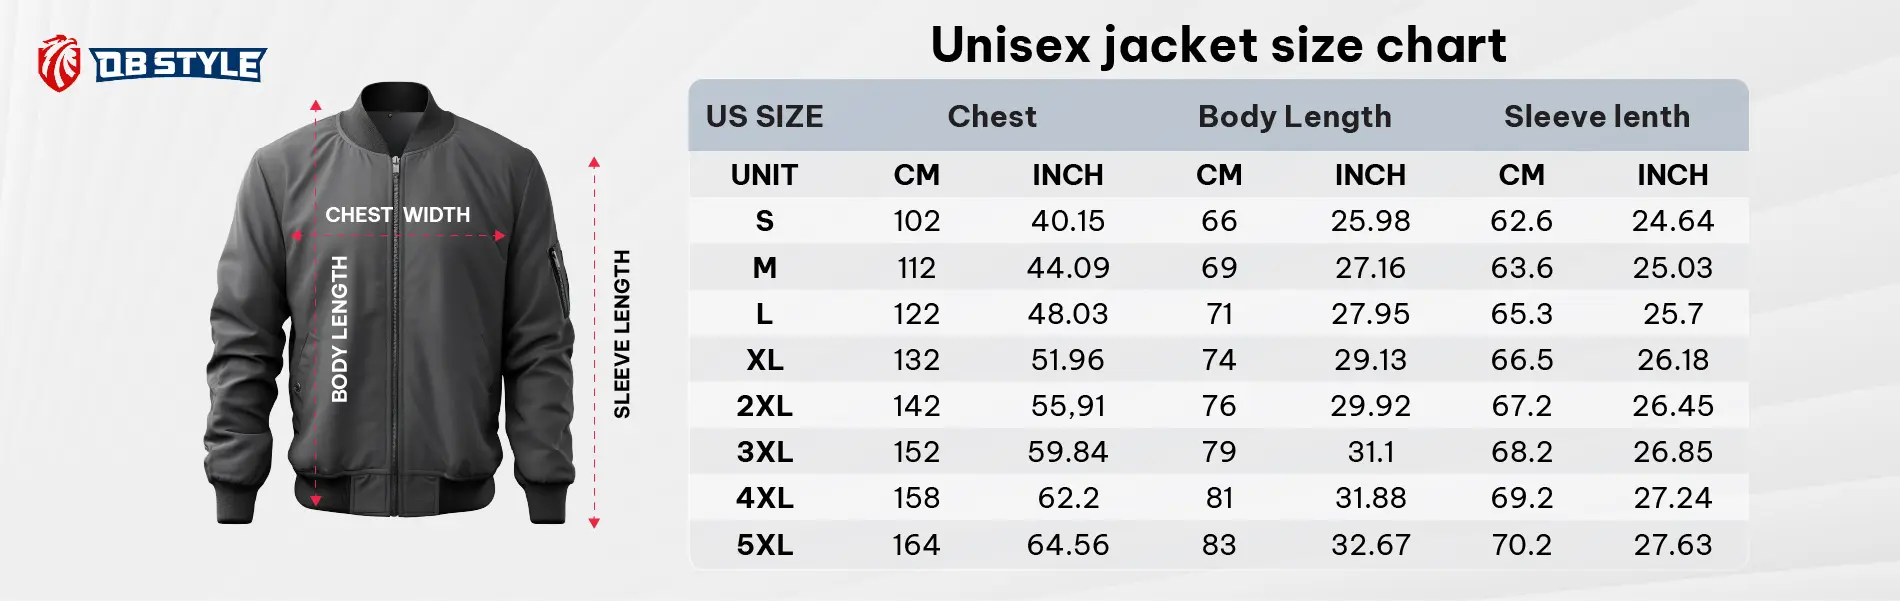 qbstyle Unisex jacket 2-100